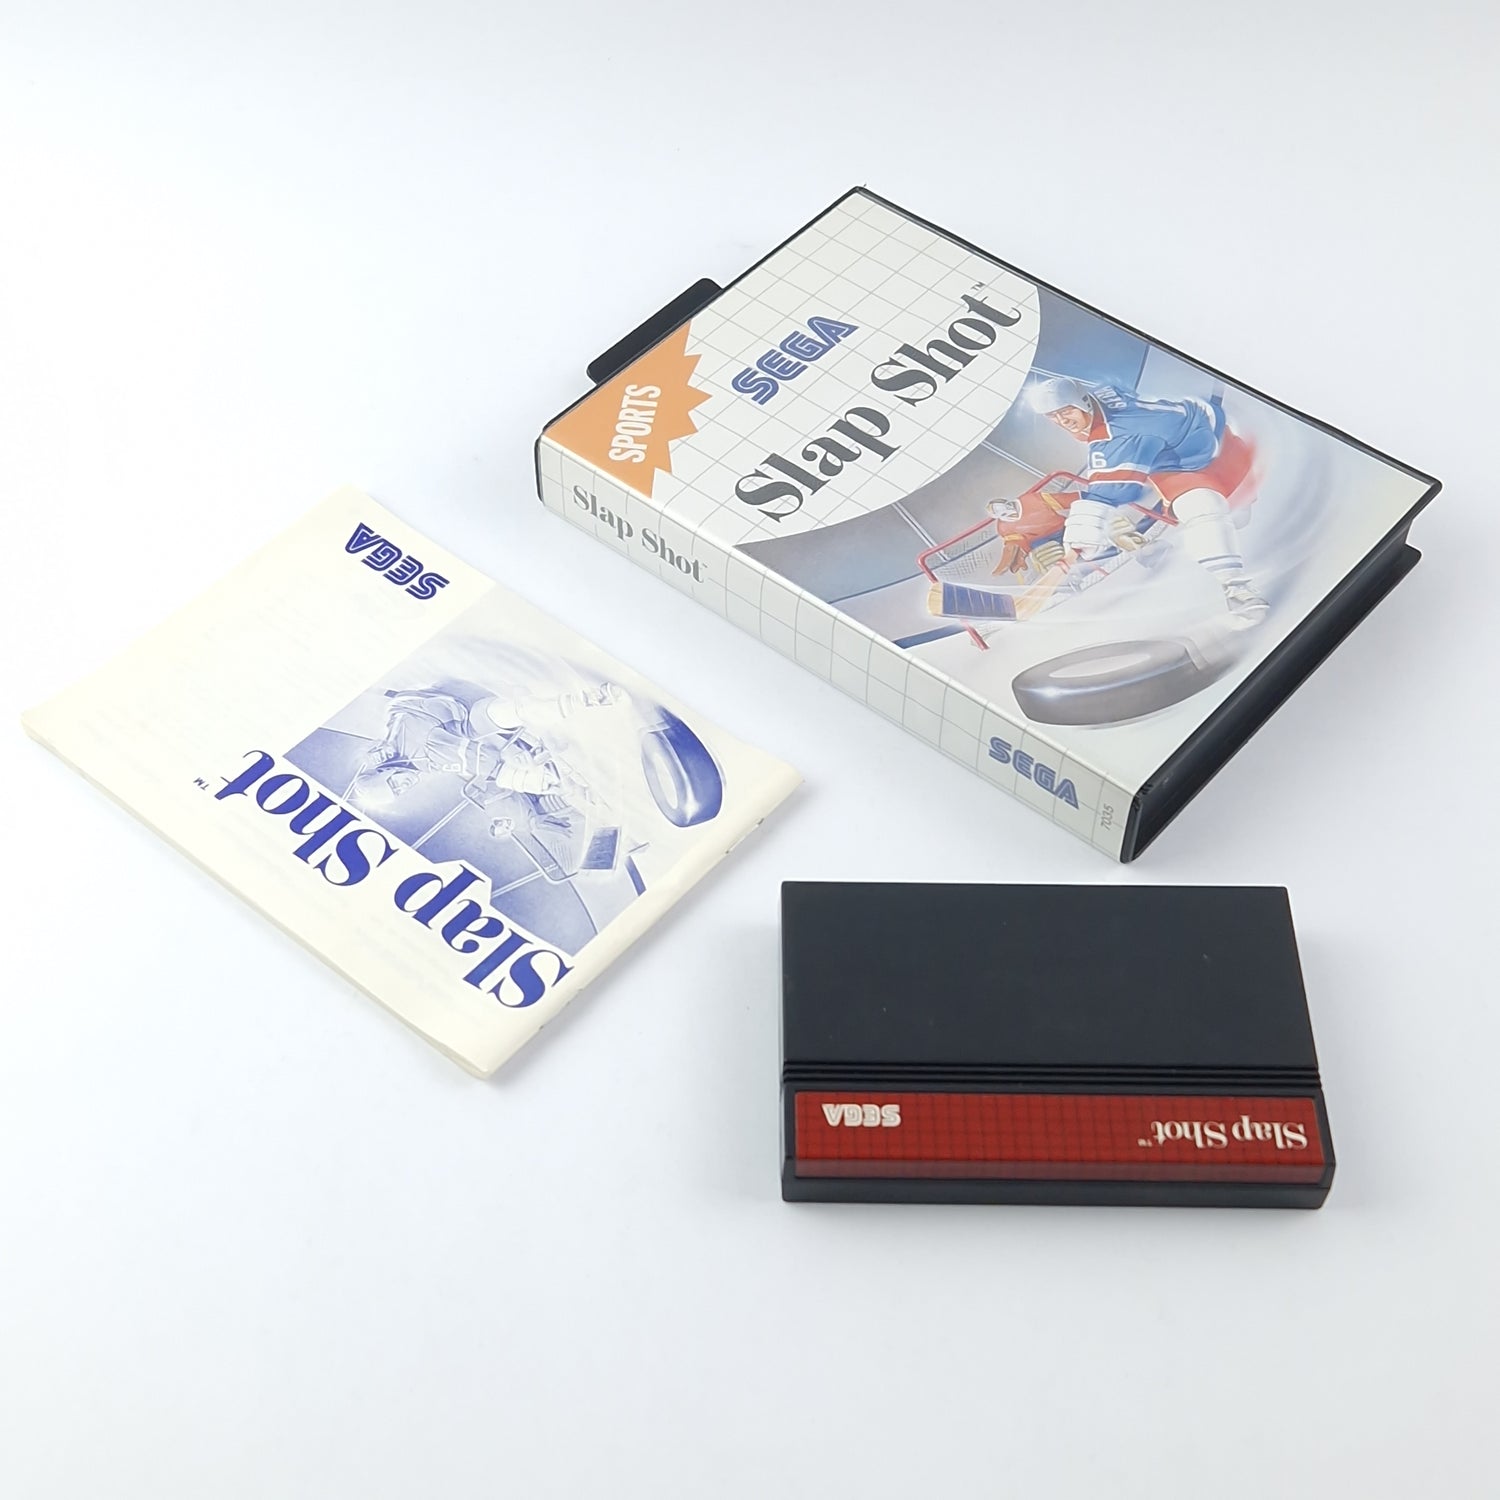 Sega Master System Spiel : Slap Shot - OVP Anleitung Modul Cartridge Ice Hockey